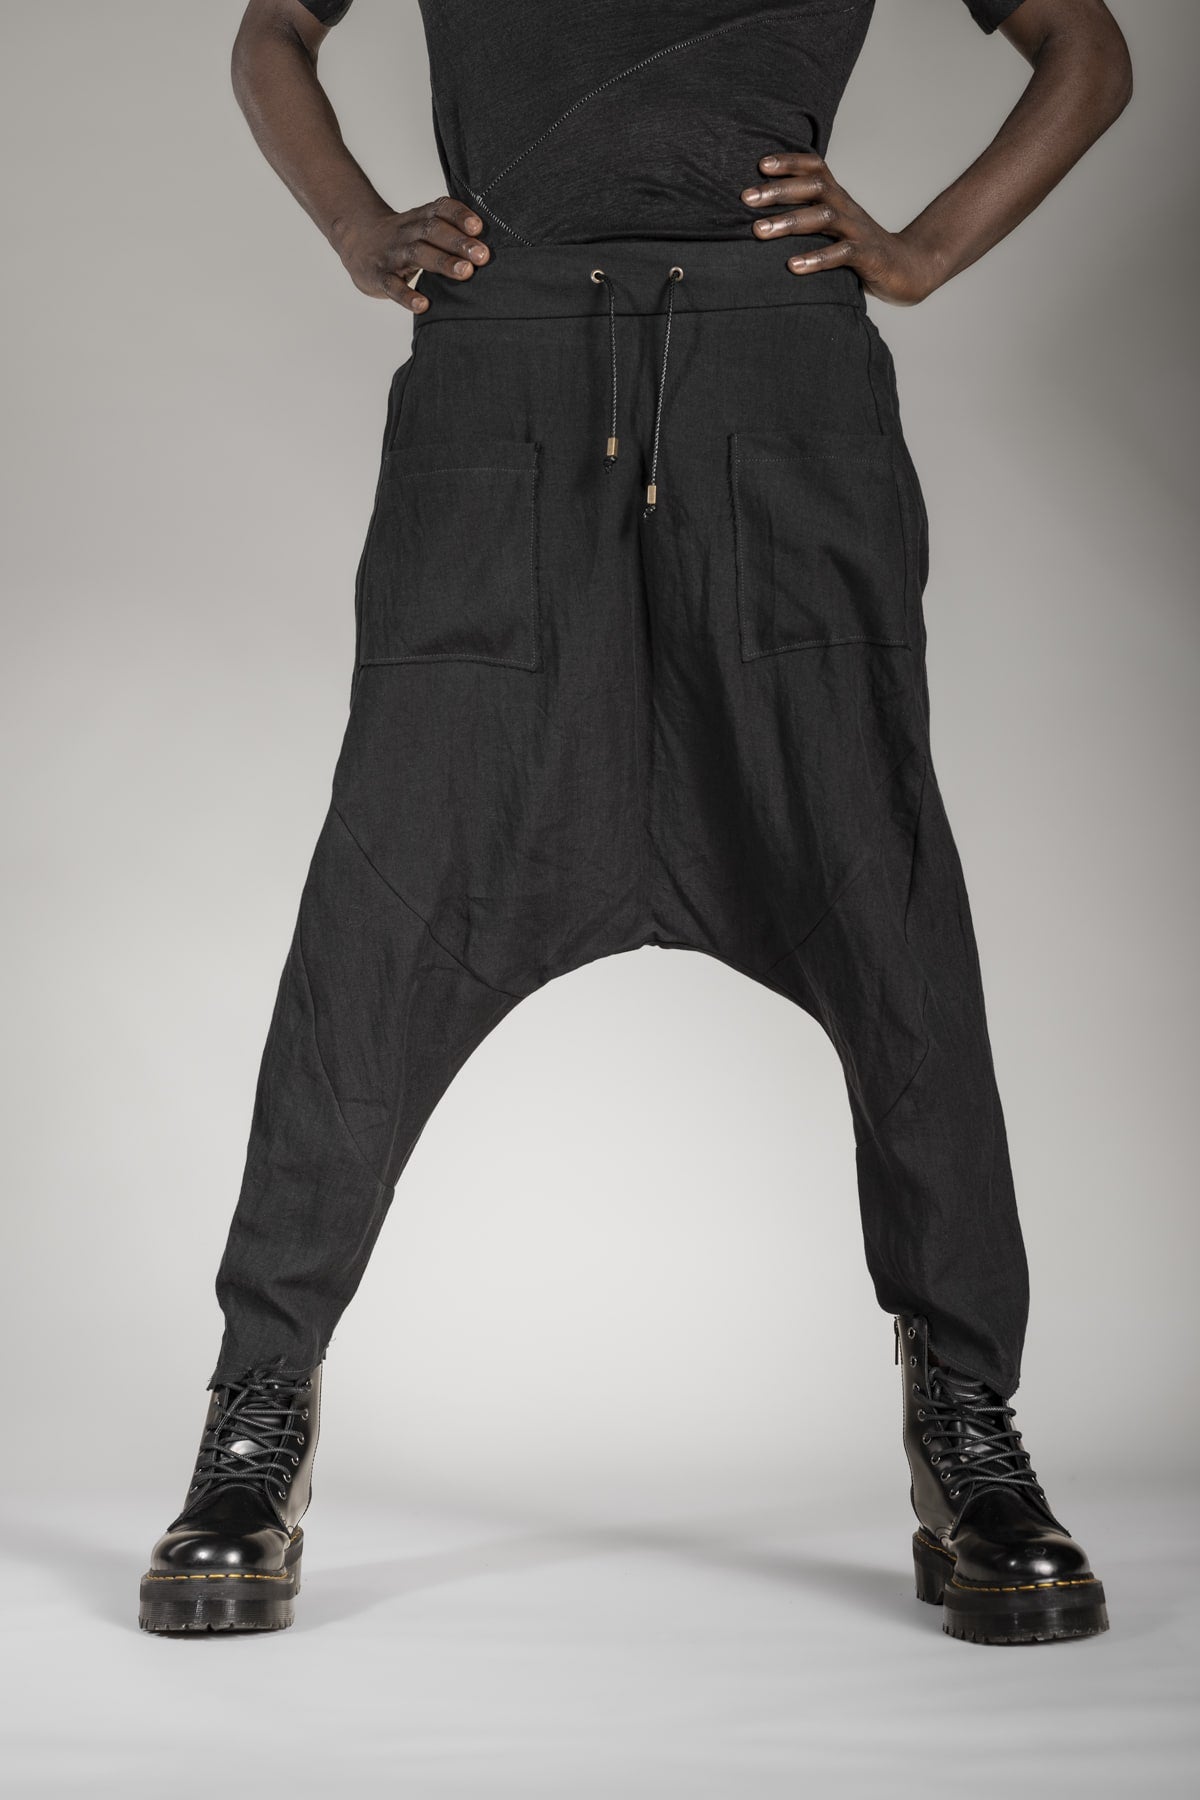 Hotmiss Men's Hip-hop Pants Jogging Harem Pants Drop Crotch Loose Baggy  Black (Small) at Amazon Men's Clothing store